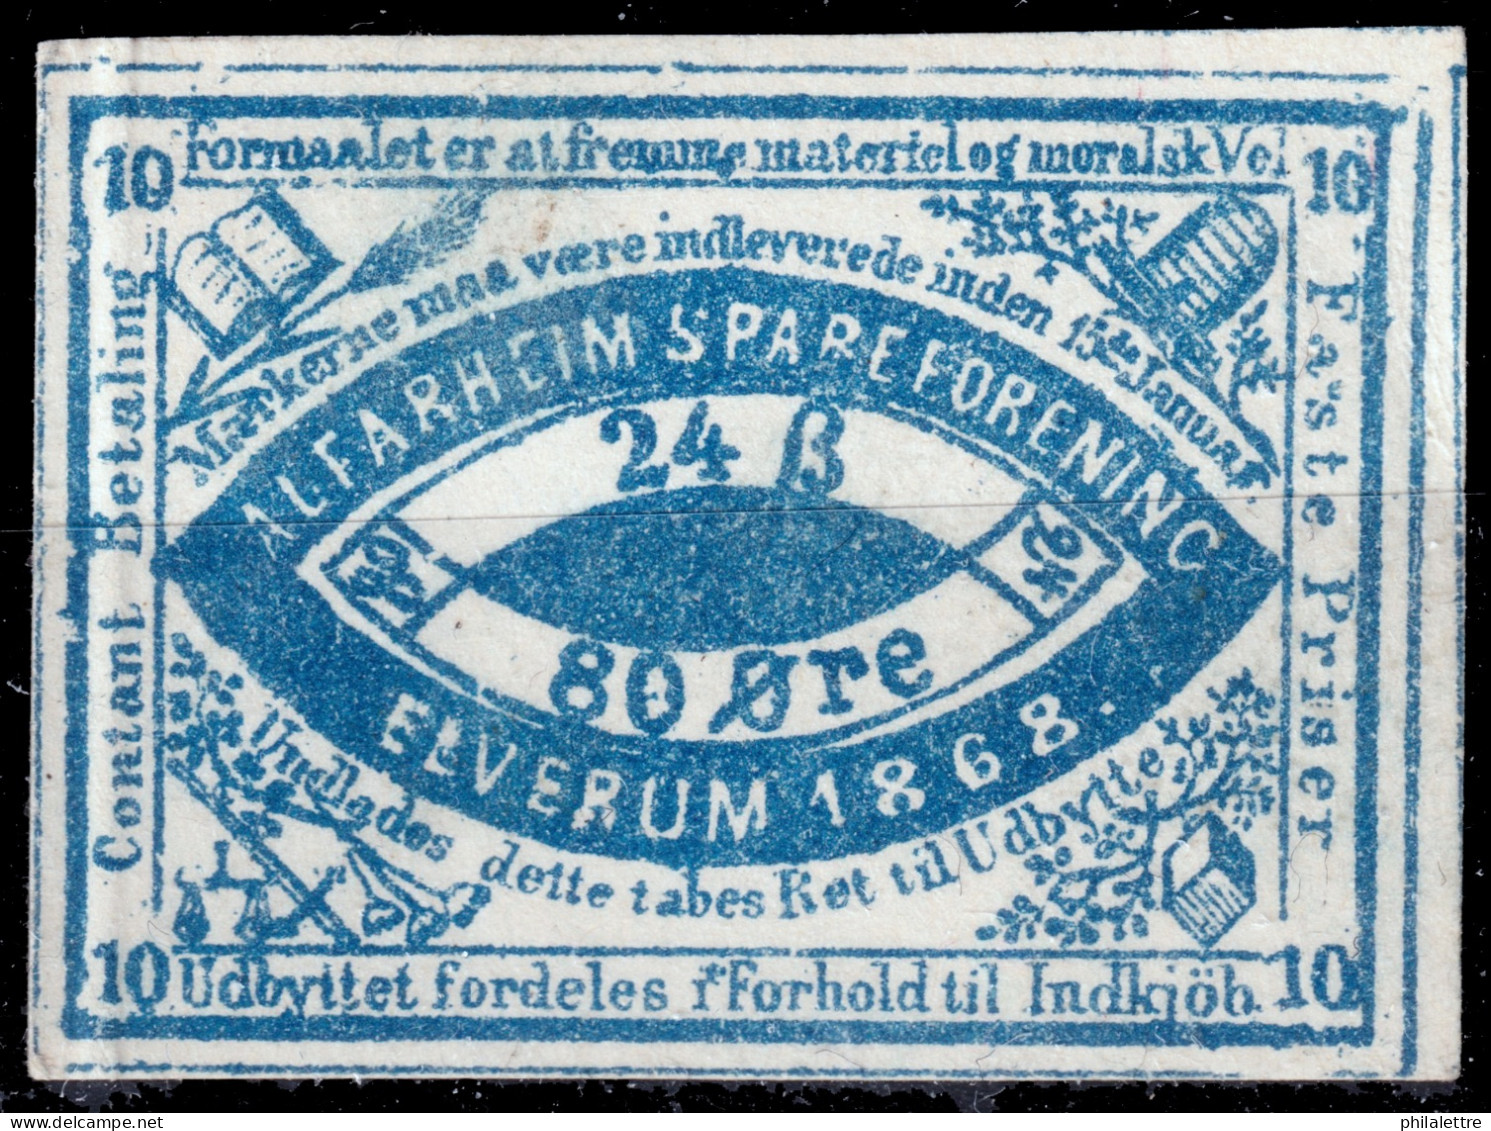 NORVÈGE / NORWAY - Savings Stamp / Label  "ALFARHEIM SPAREFORENING" 80 øre Blue - On Card, No Gum - Revenue Stamps